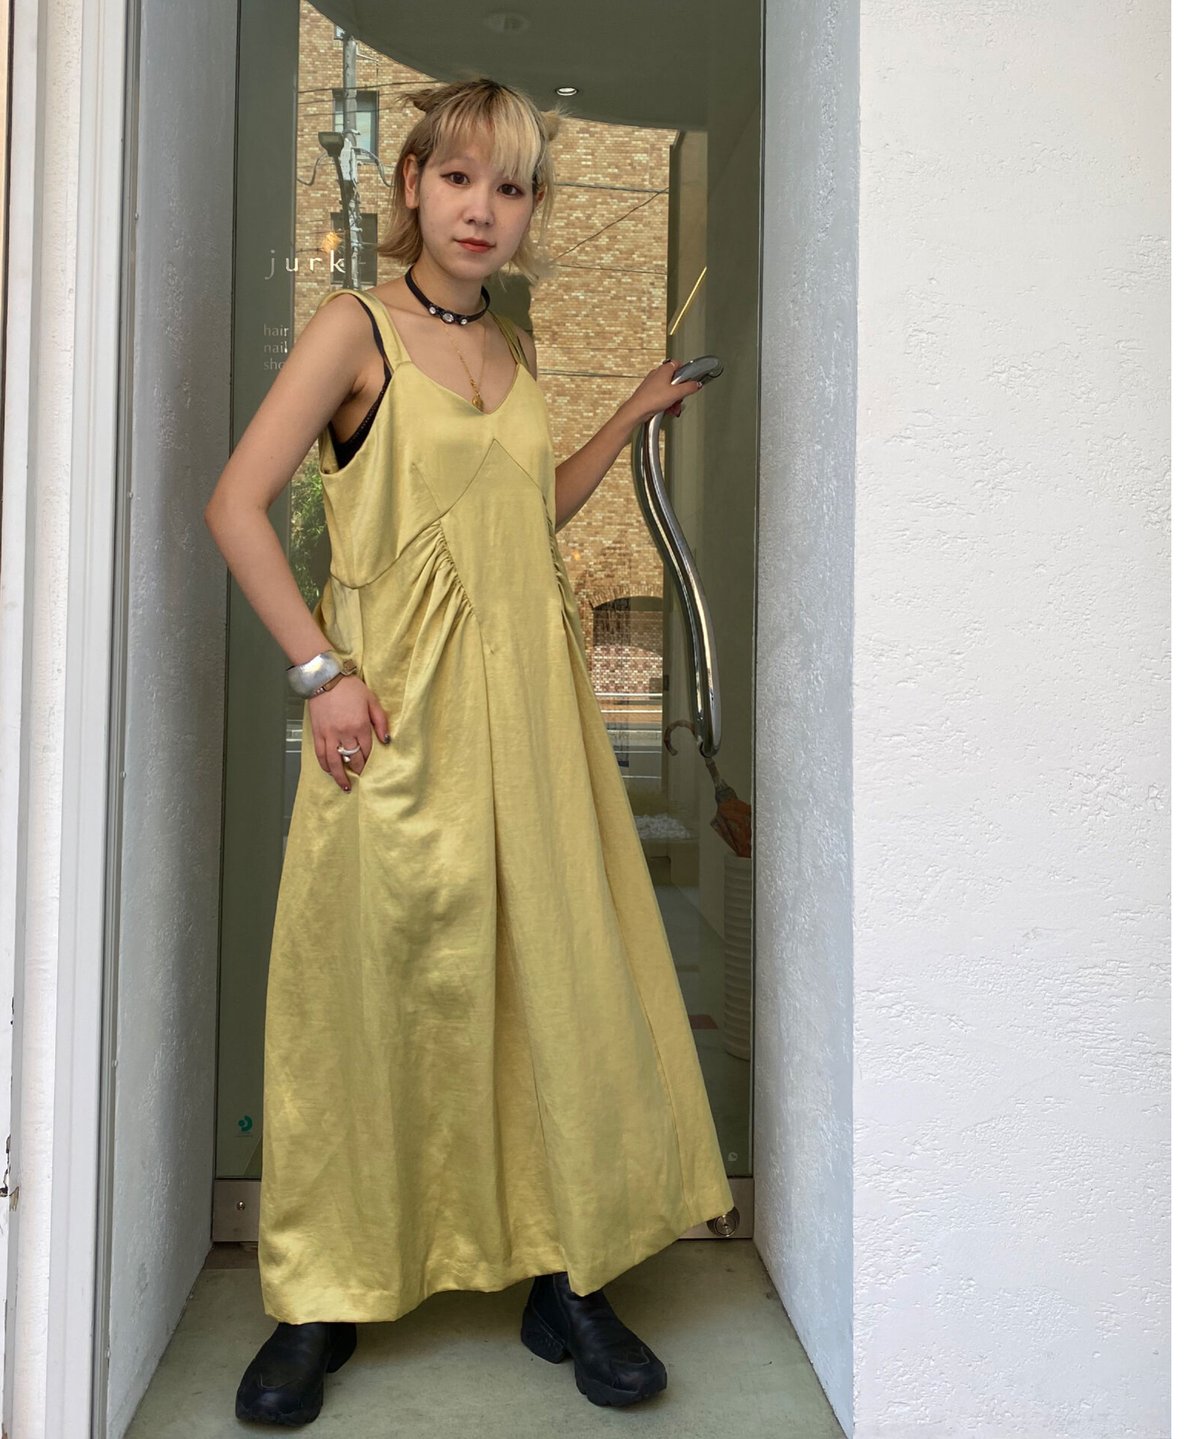 AKIKOAOKI / slipping lime dress | jurk tokyo